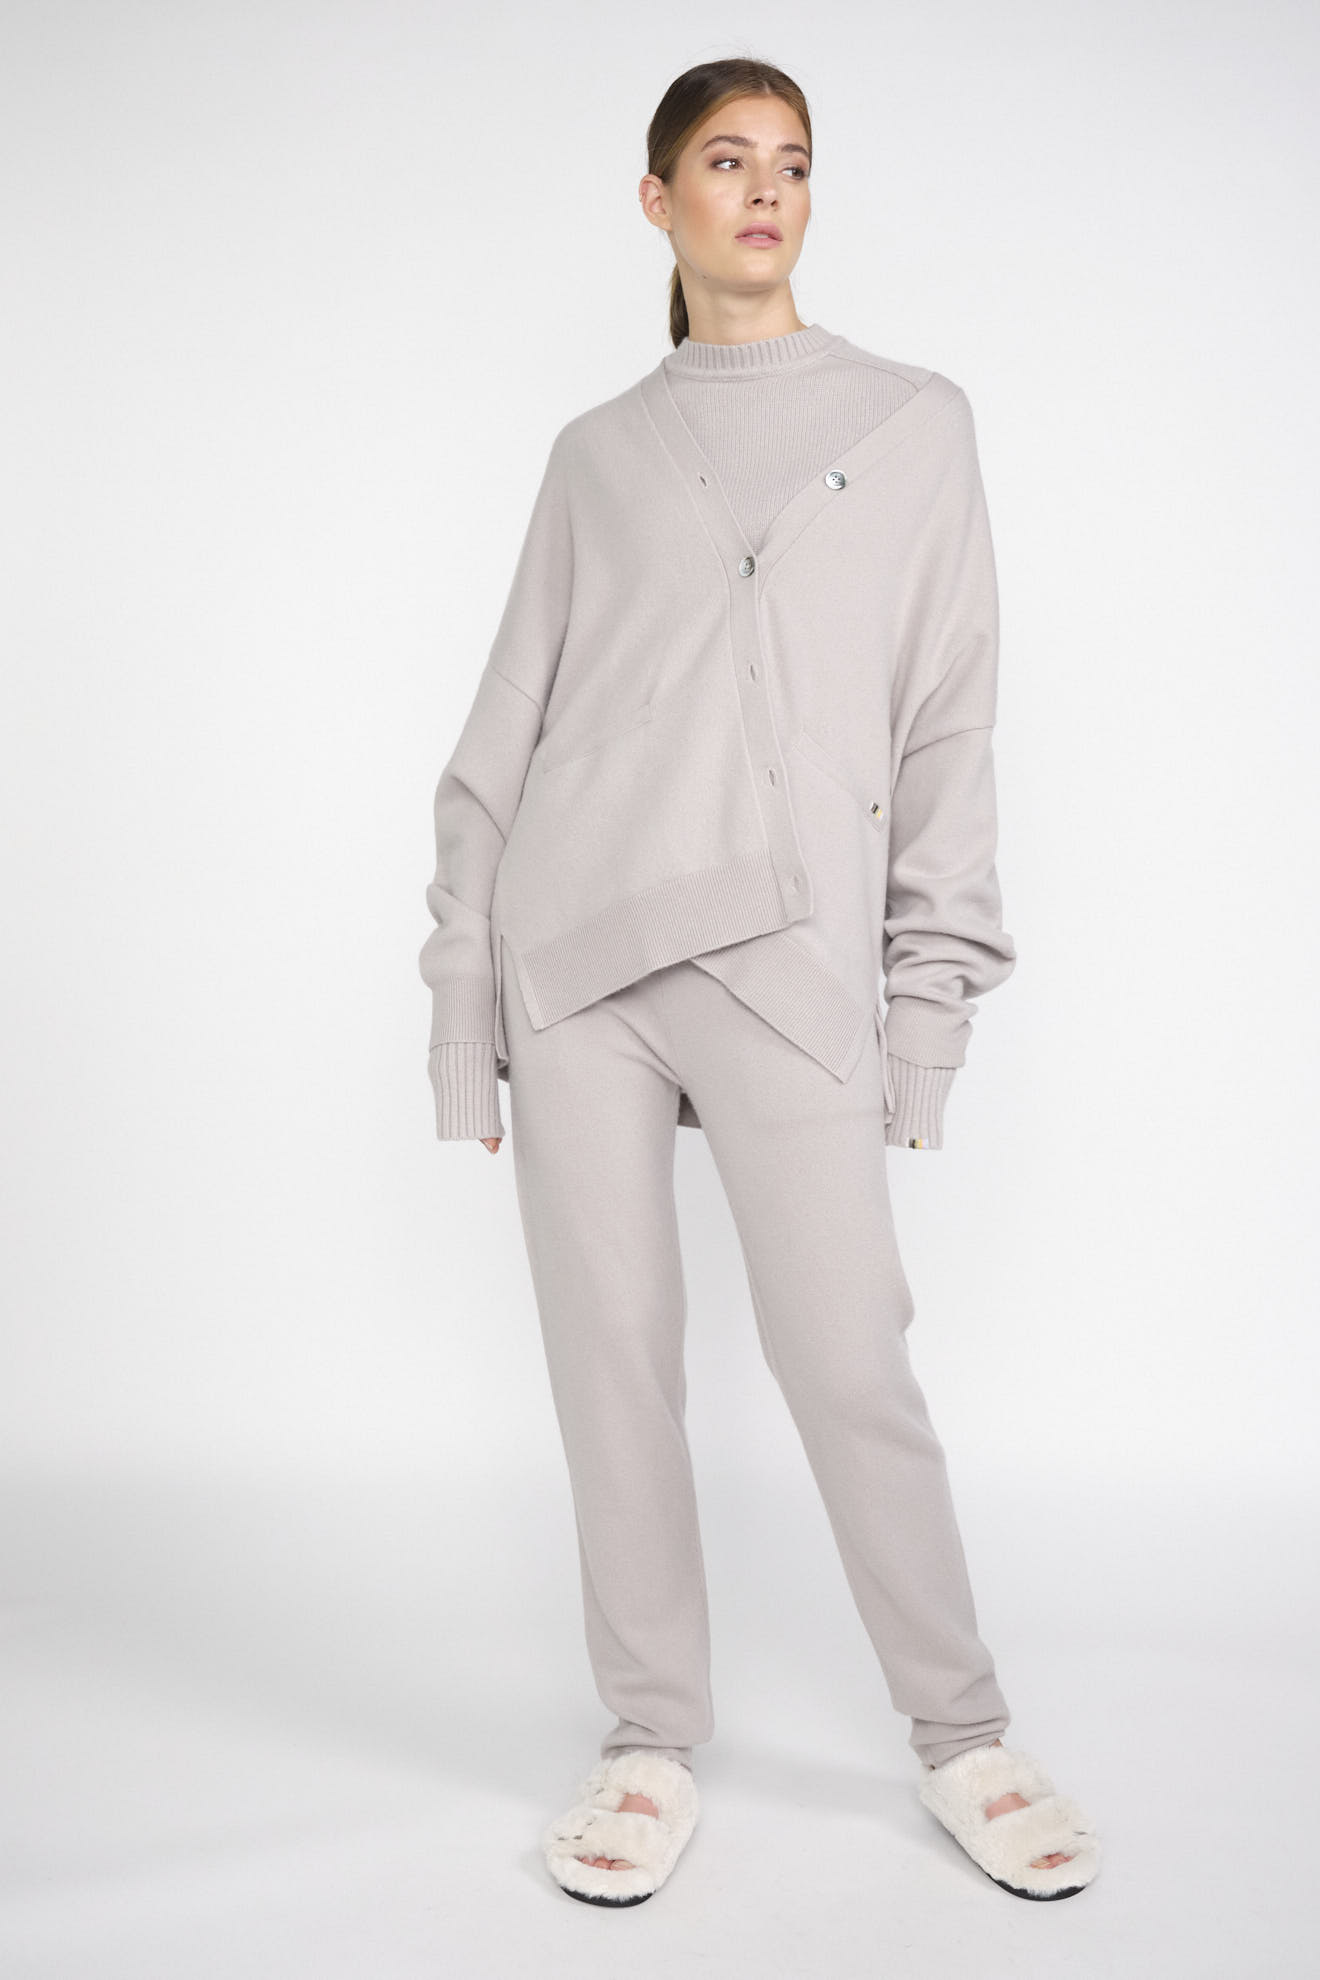 Extreme Cashmere Knit Tokio grey One Size